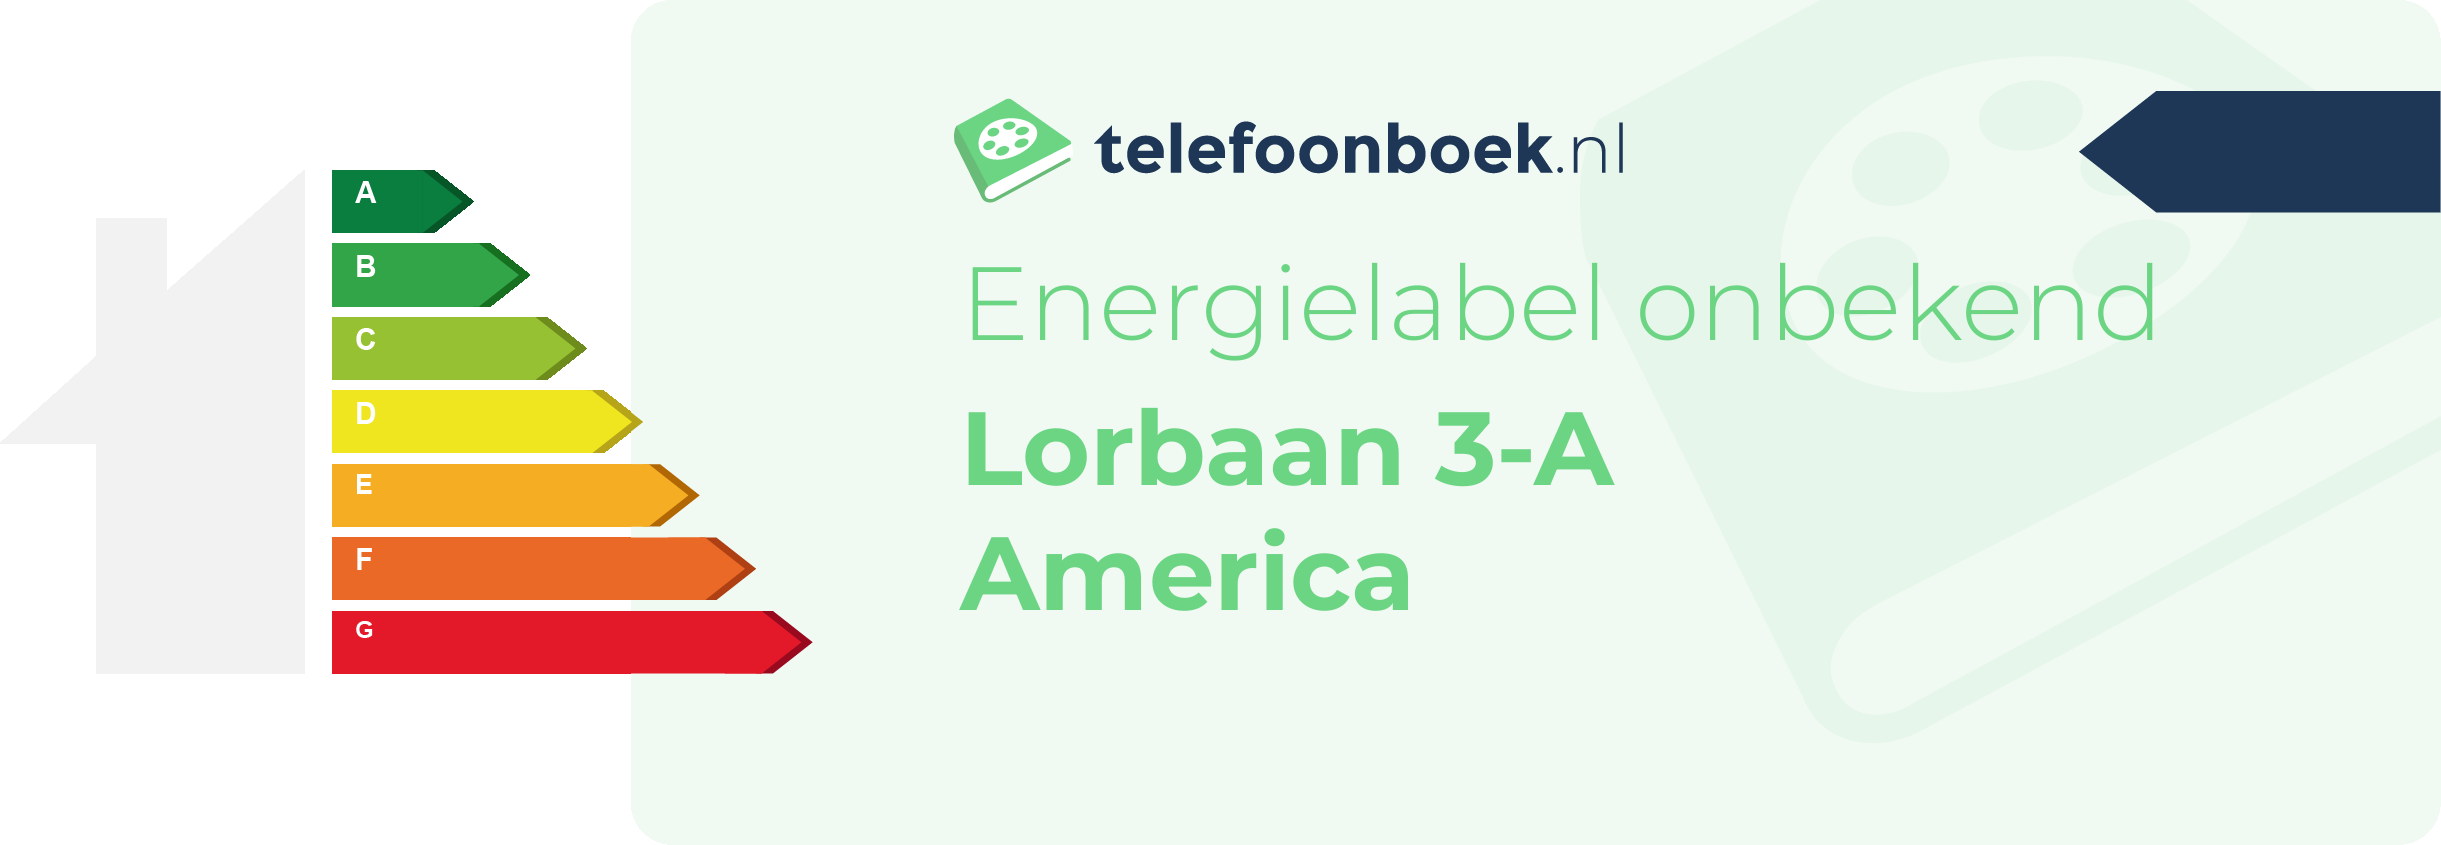 Energielabel Lorbaan 3-A America